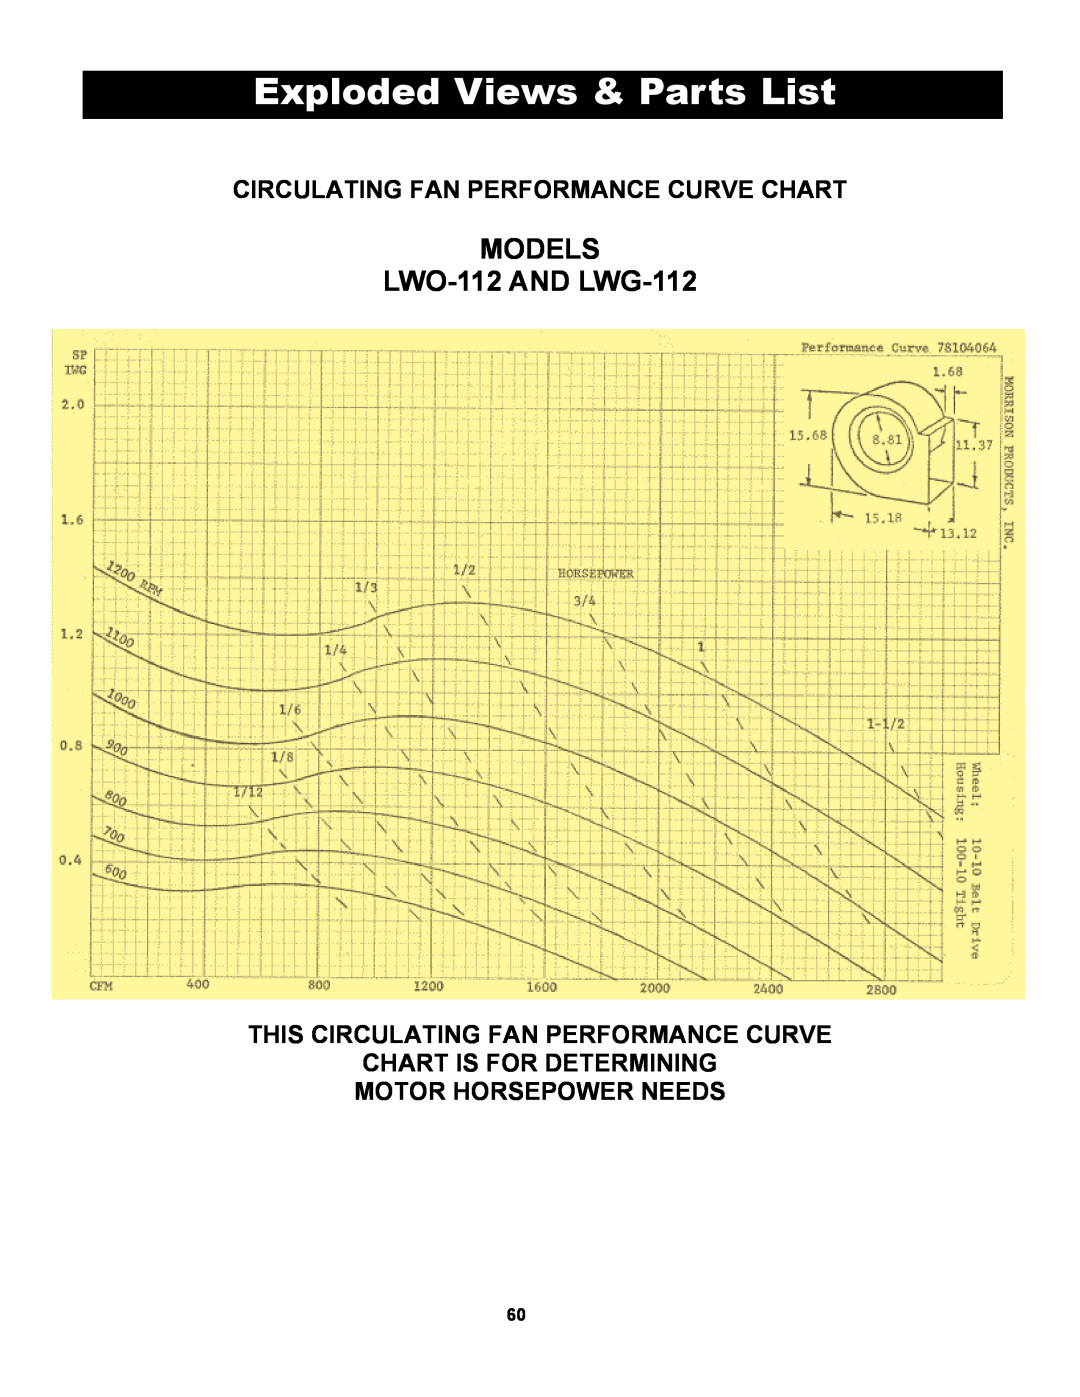 Yukon Advanced Optics Oil Furnace owner manual MODELS LWO-112AND LWG-112, Circulating Fan Performance Curve Chart 